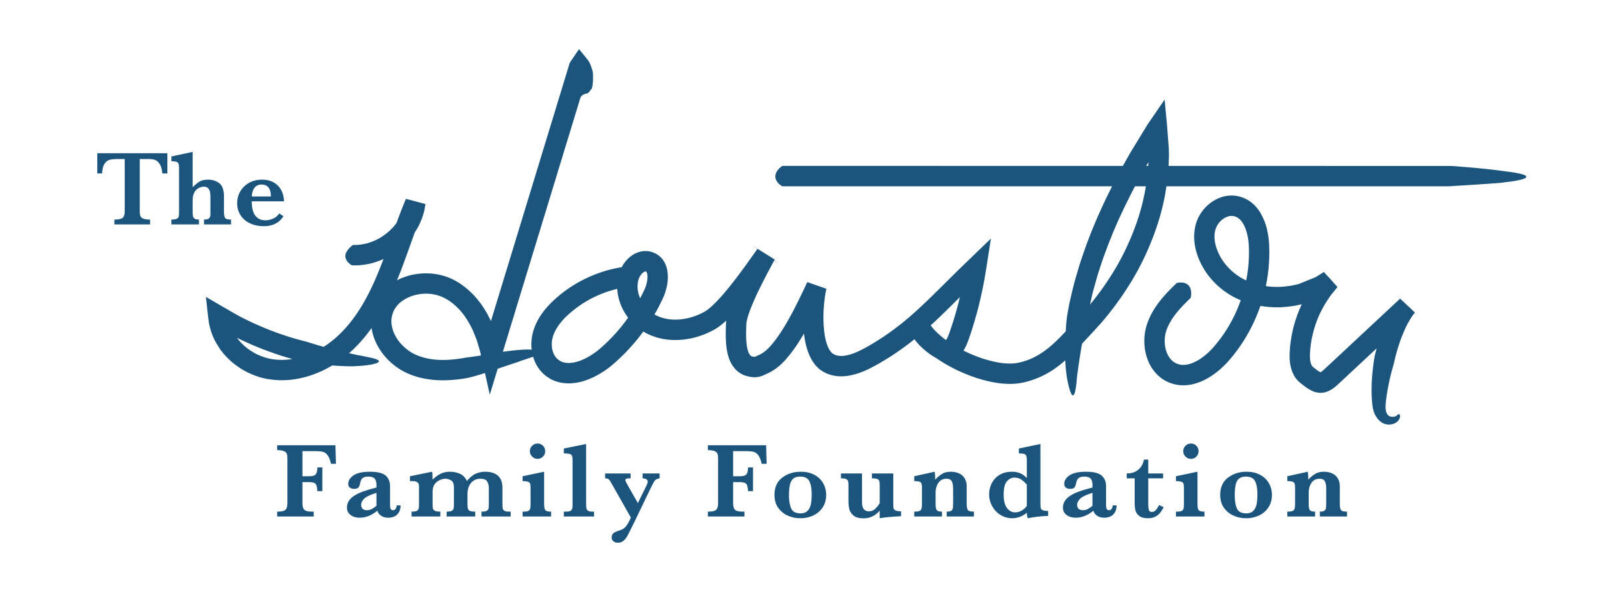 The Houston Family Foundation